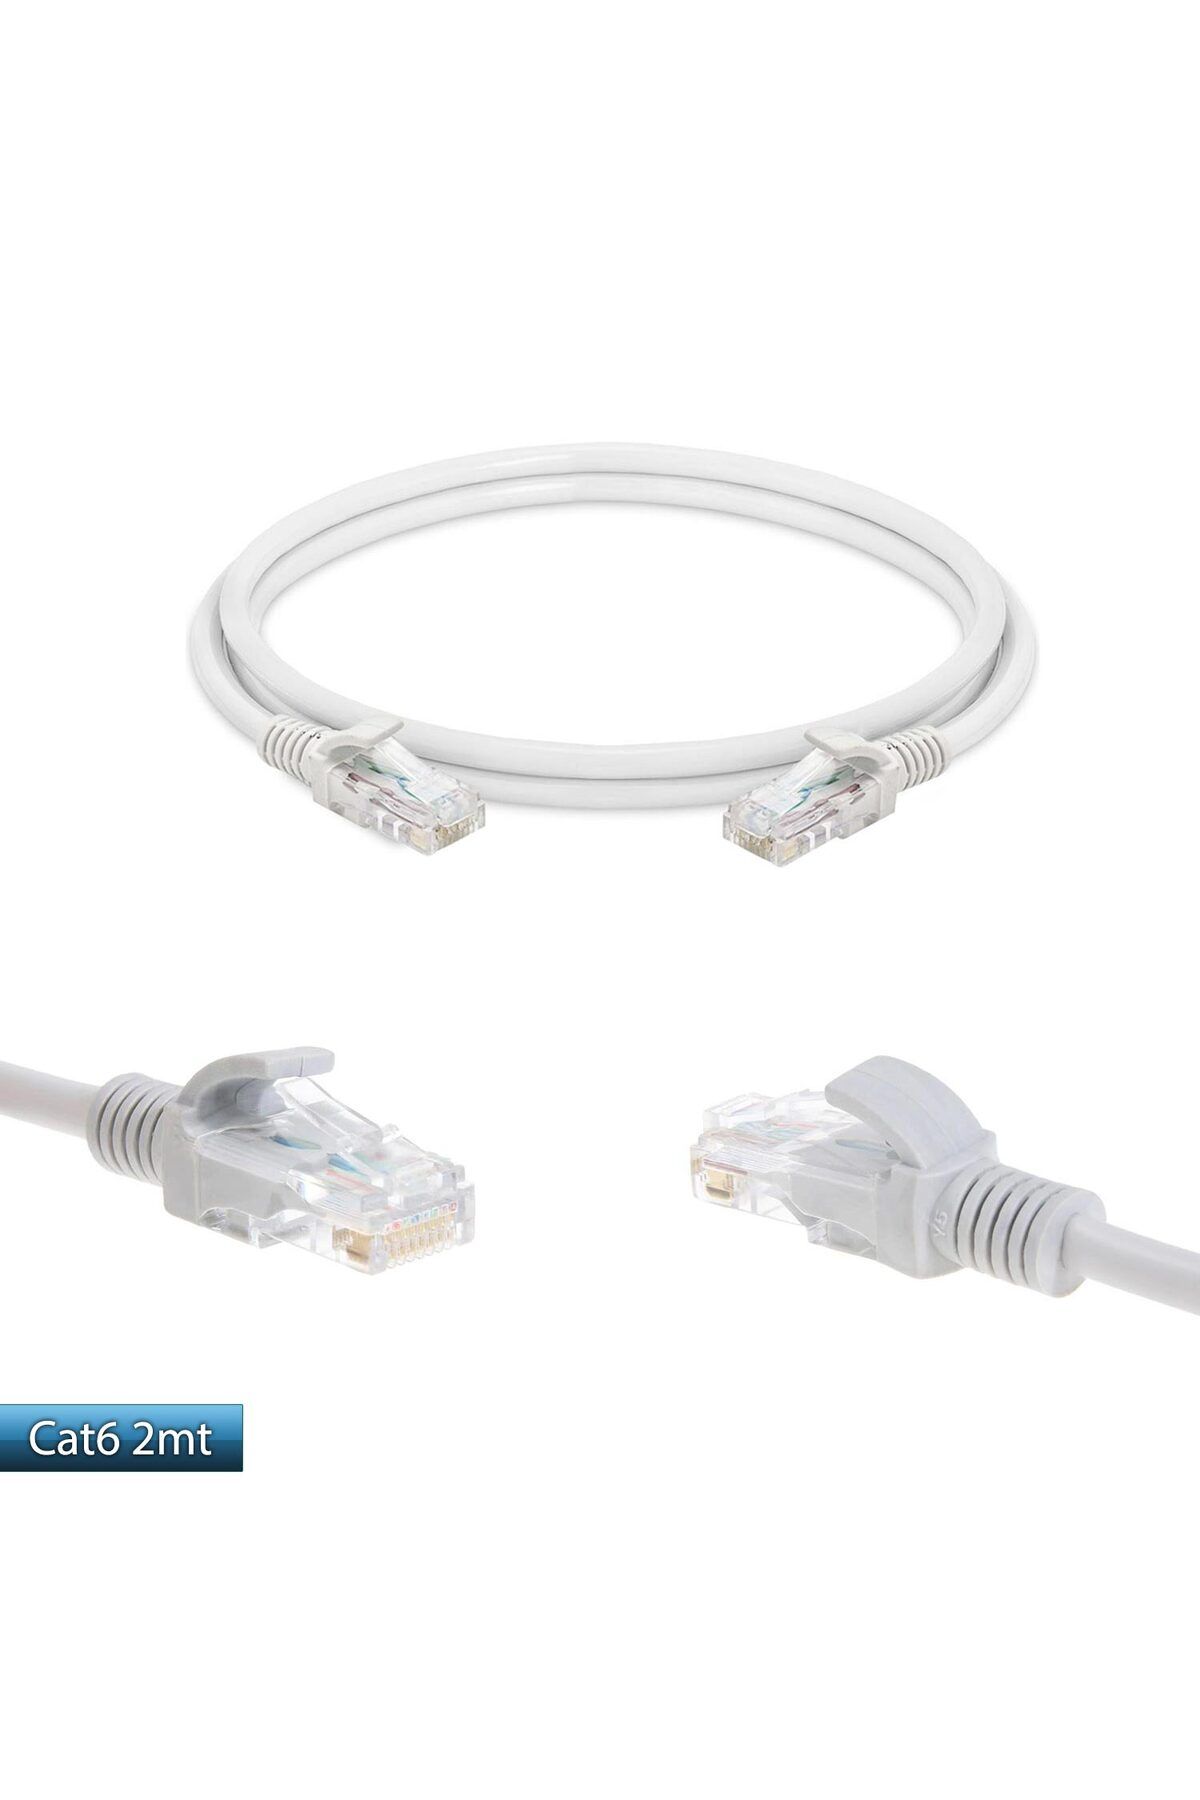 Genel Markalar Akdenizpos  Xd01 Cat6 Patch Network Ethernet Kablo 2Mt (Yeni)